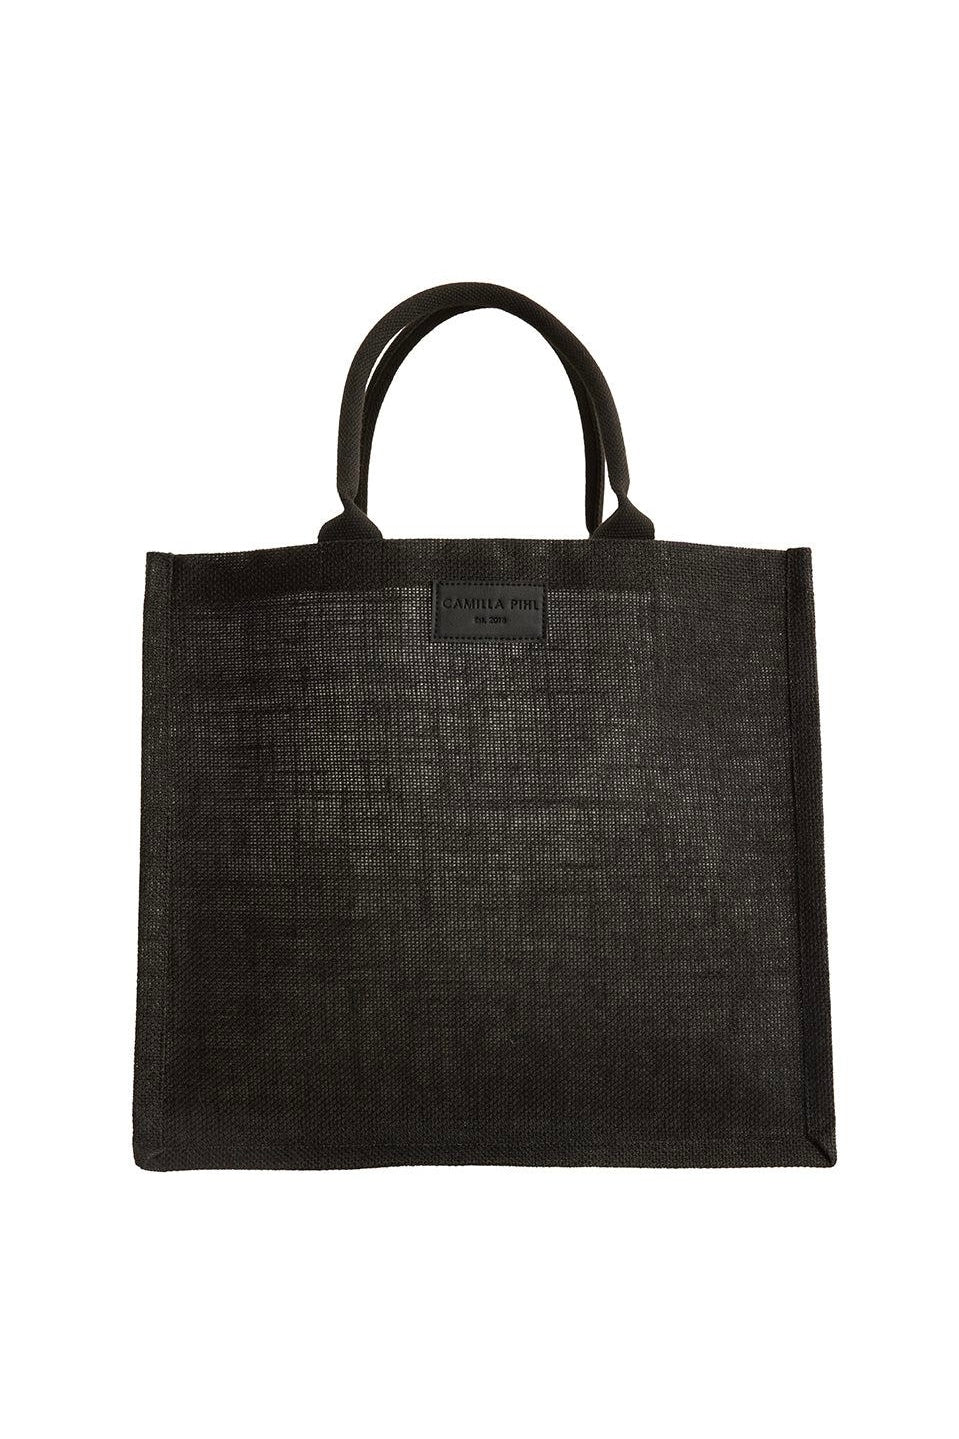 Camilla Pihl Market bag Large - Black